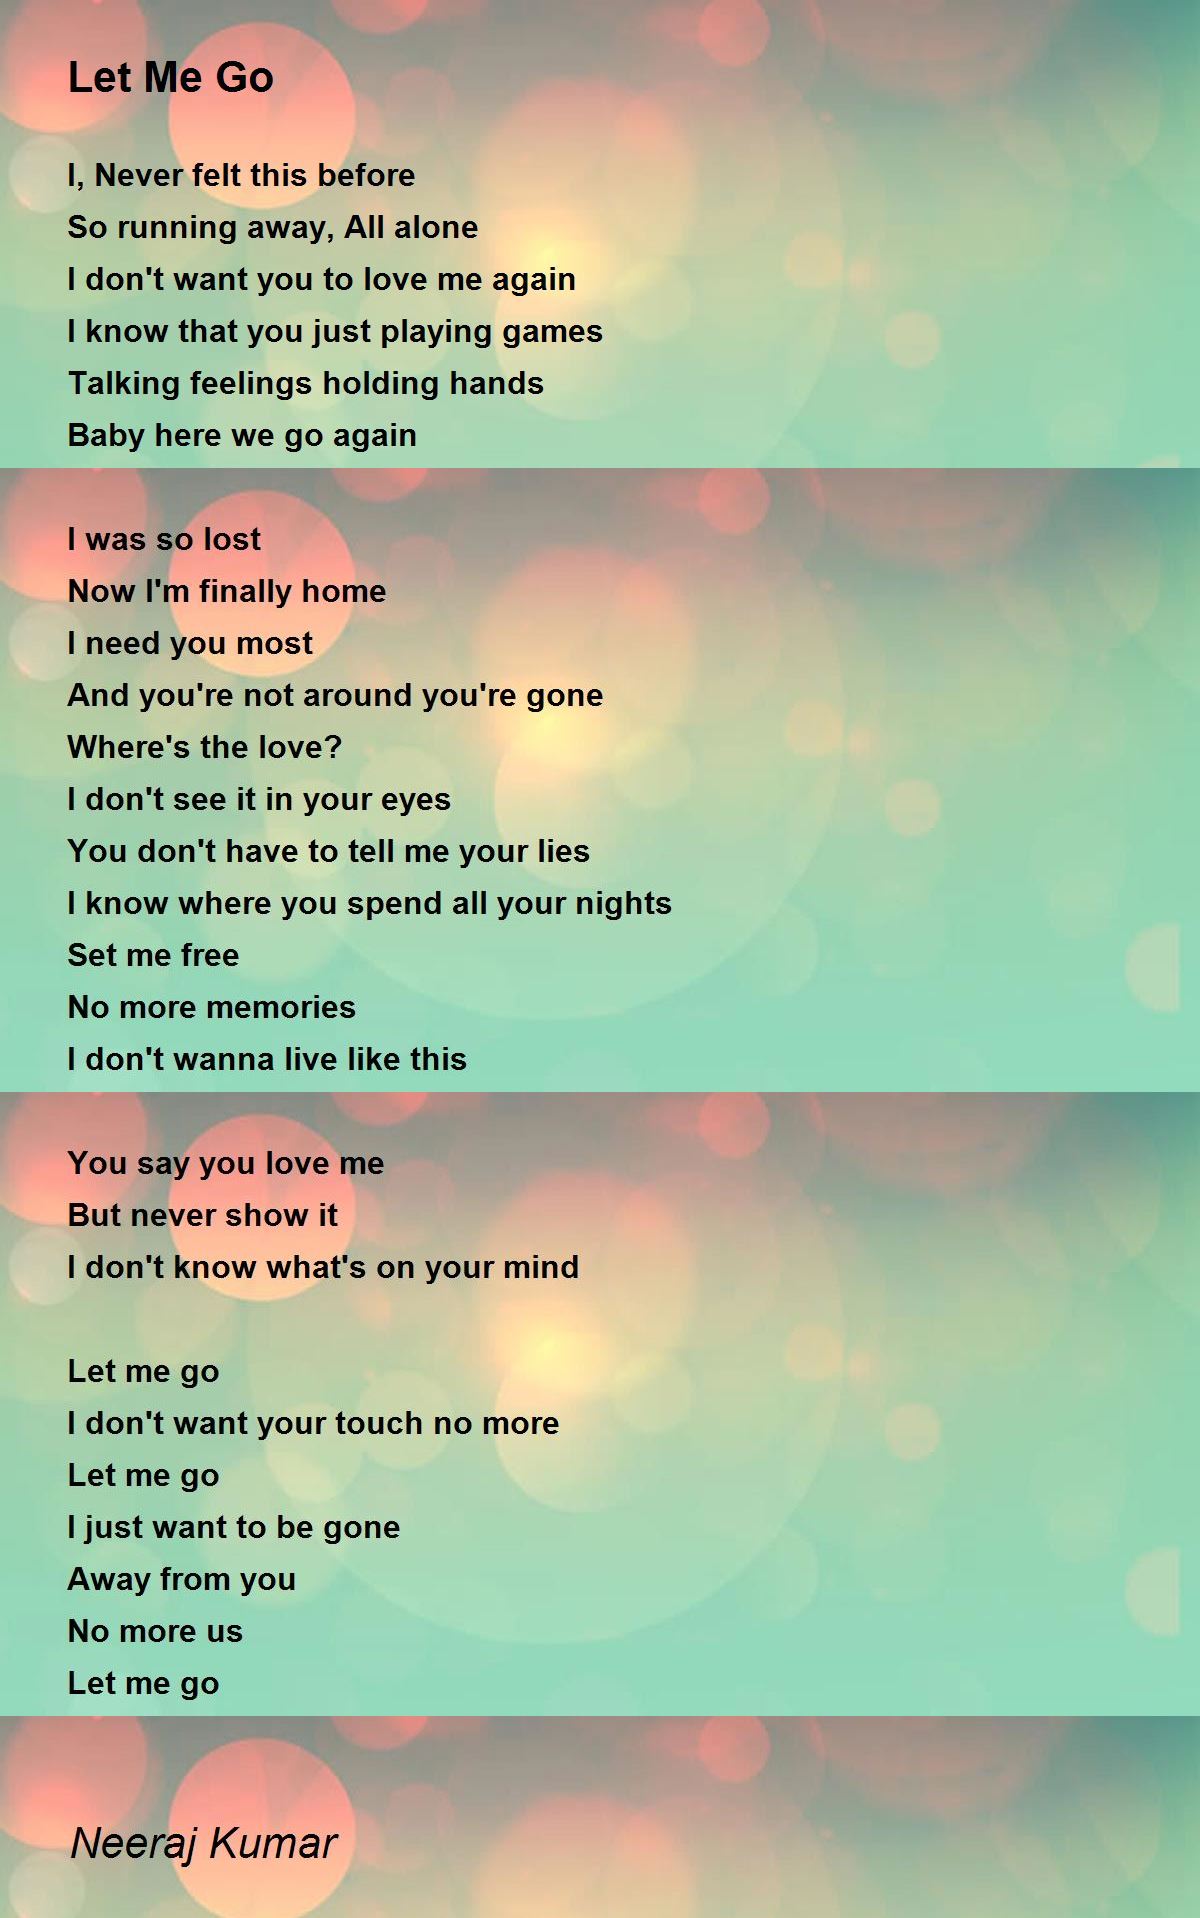 Love Was A Lie - Love Was A Lie Poem by Neeraj Kumar